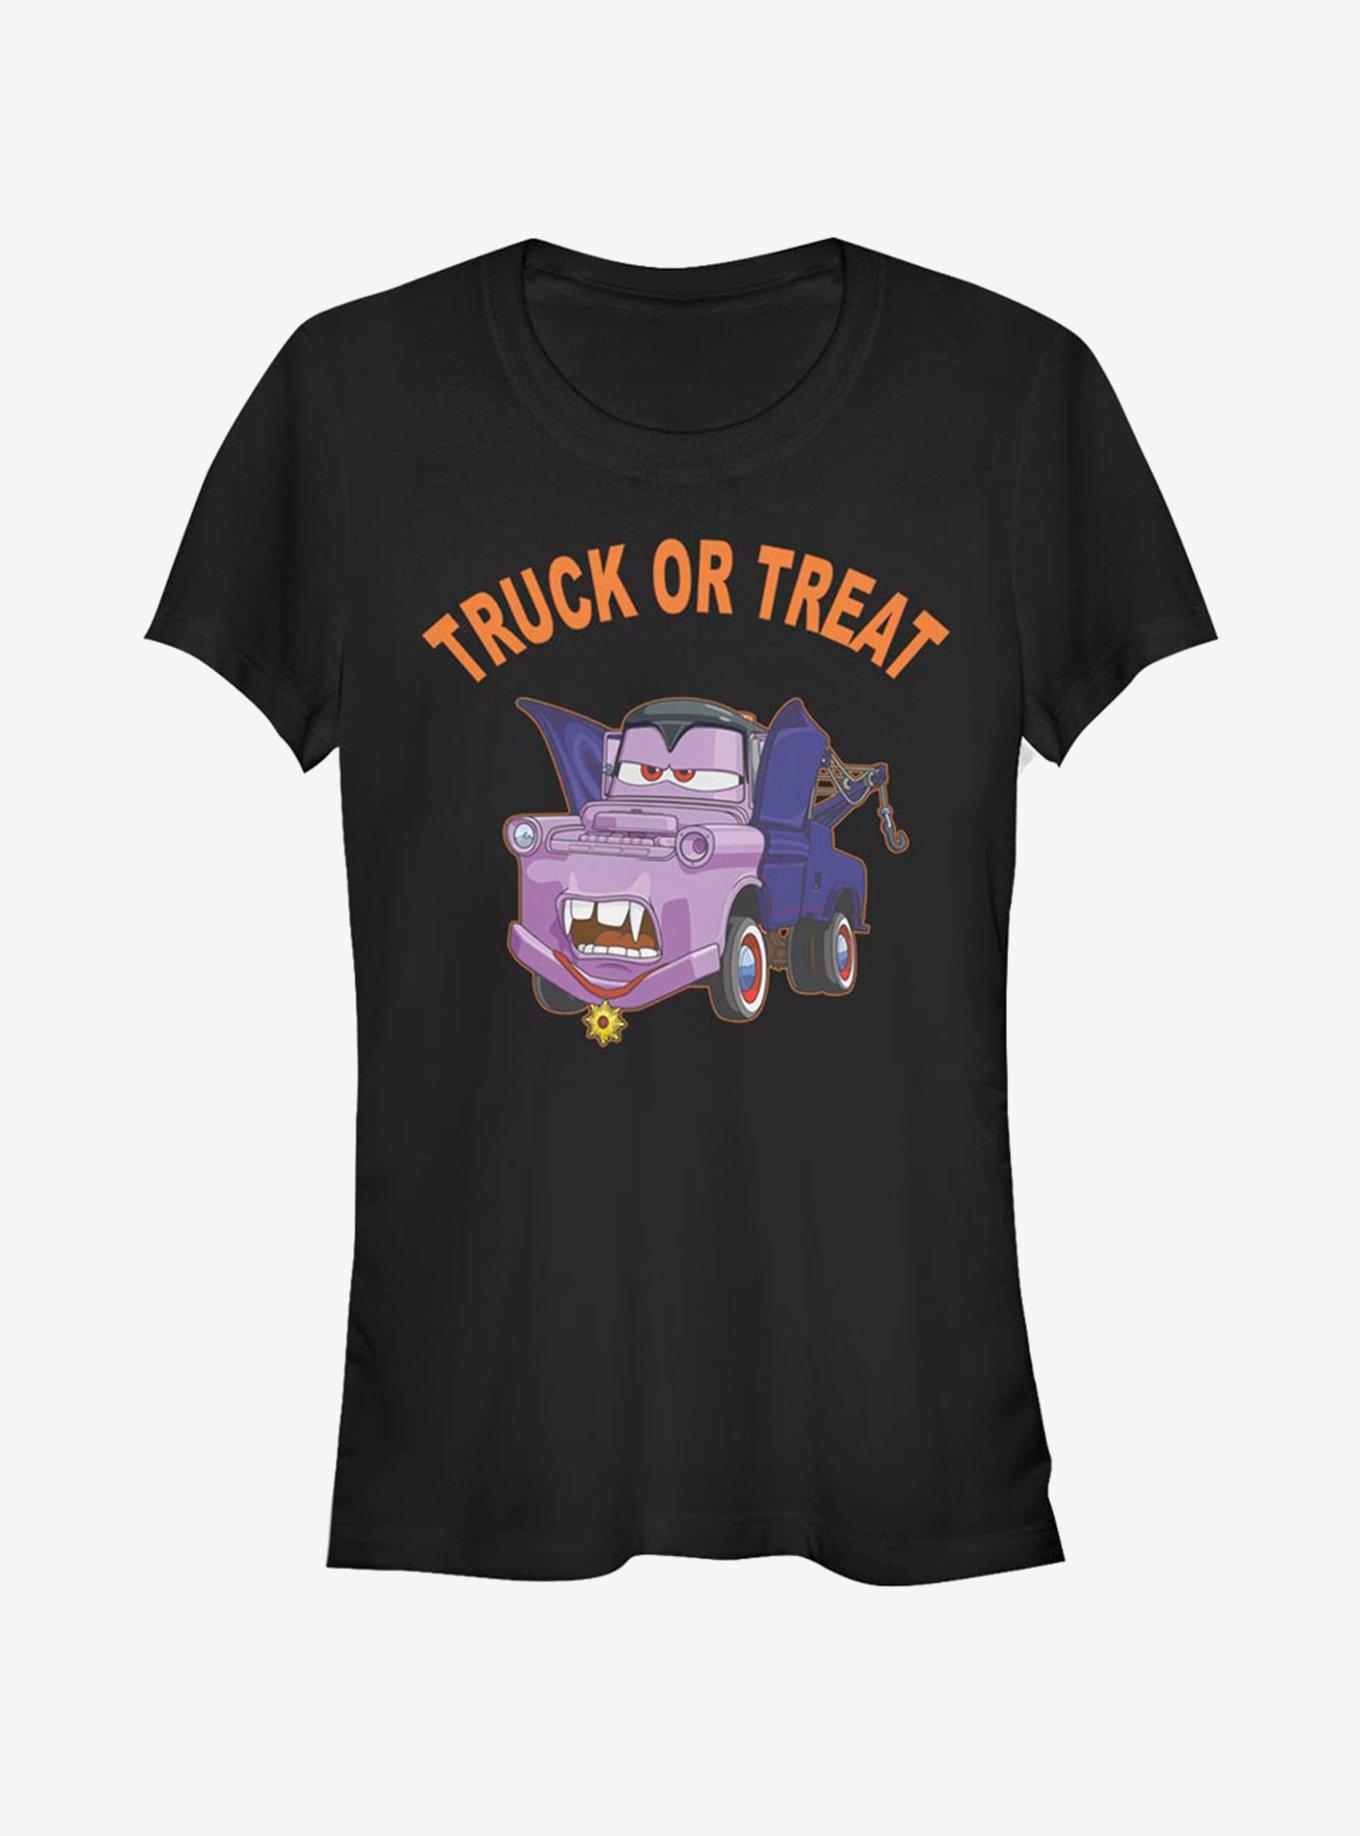 Disney Pixar Cars Mater Truck Or Treat Color Girls T-Shirt